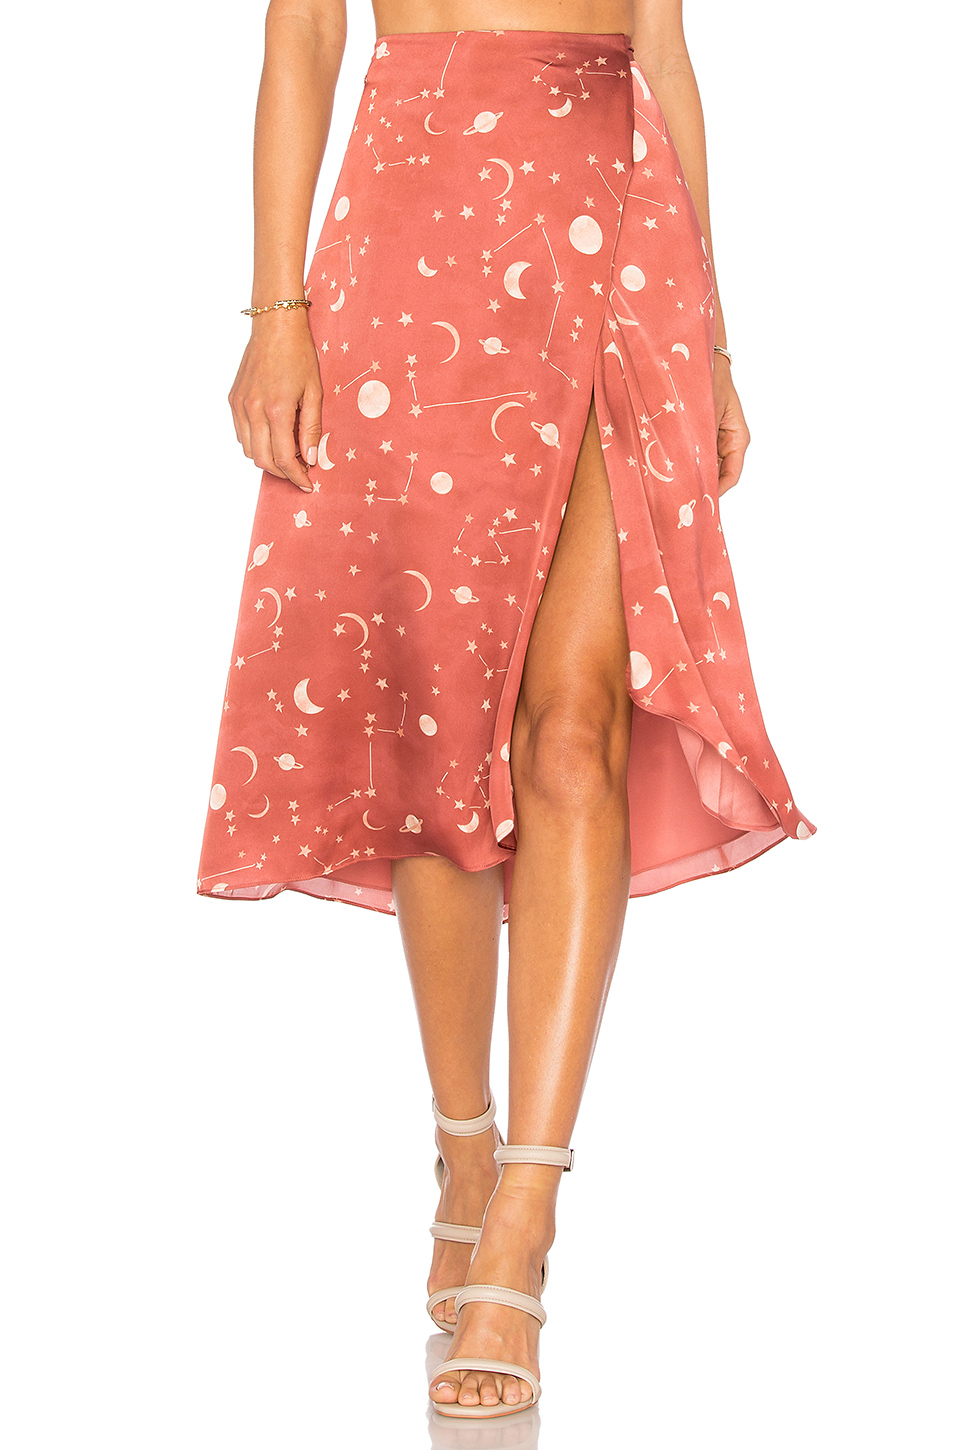 Constellation print skirt